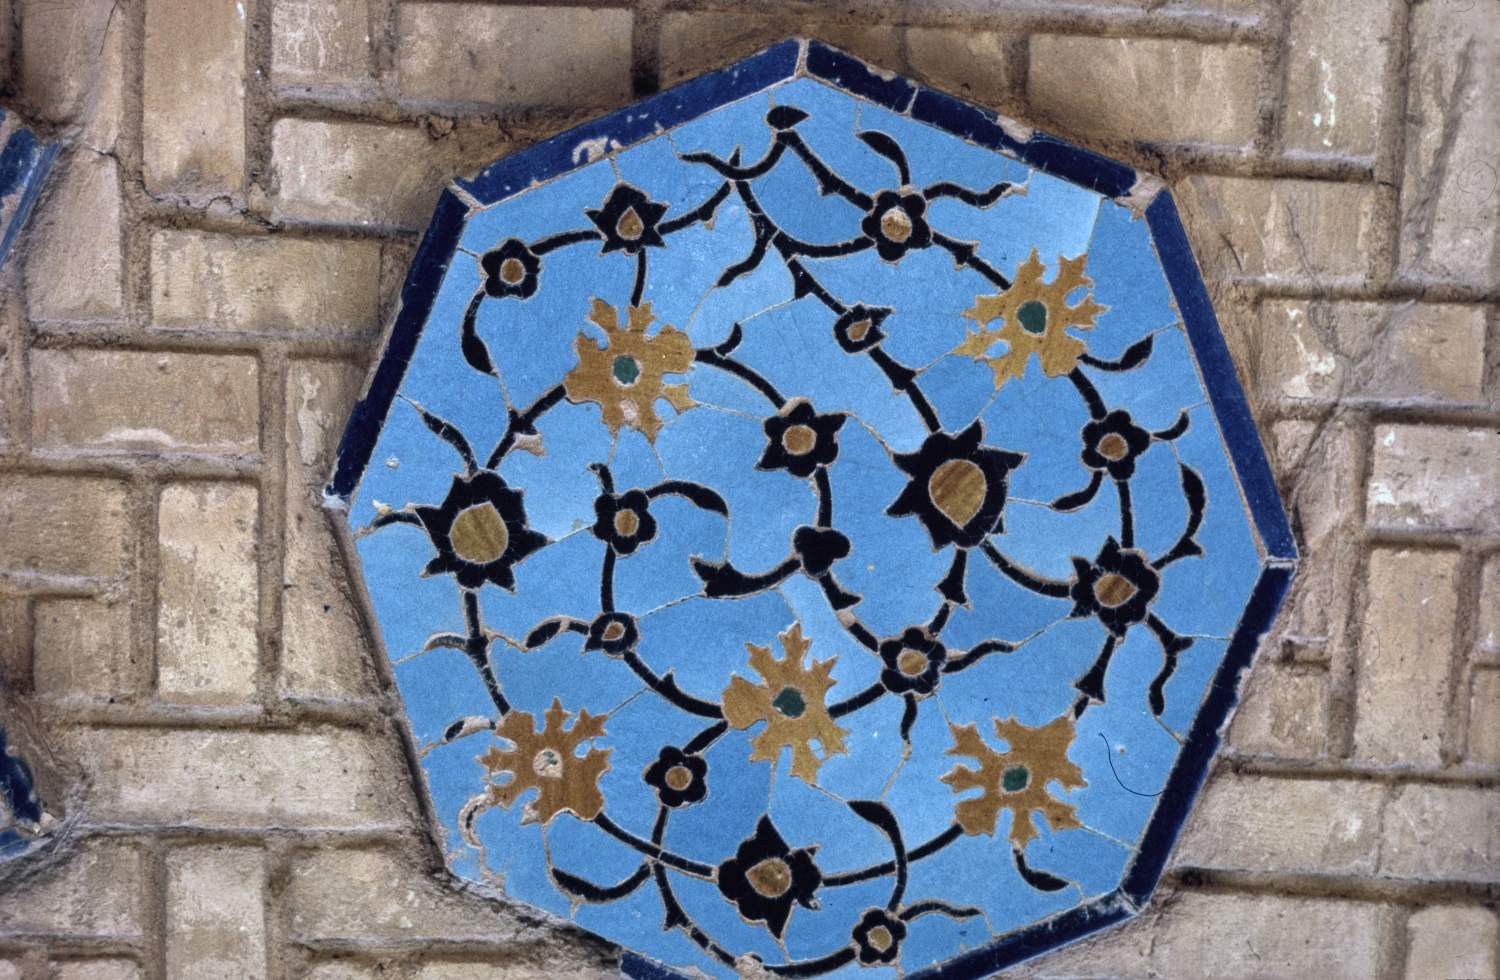 Detail of an octagonal tile mosaic panel.